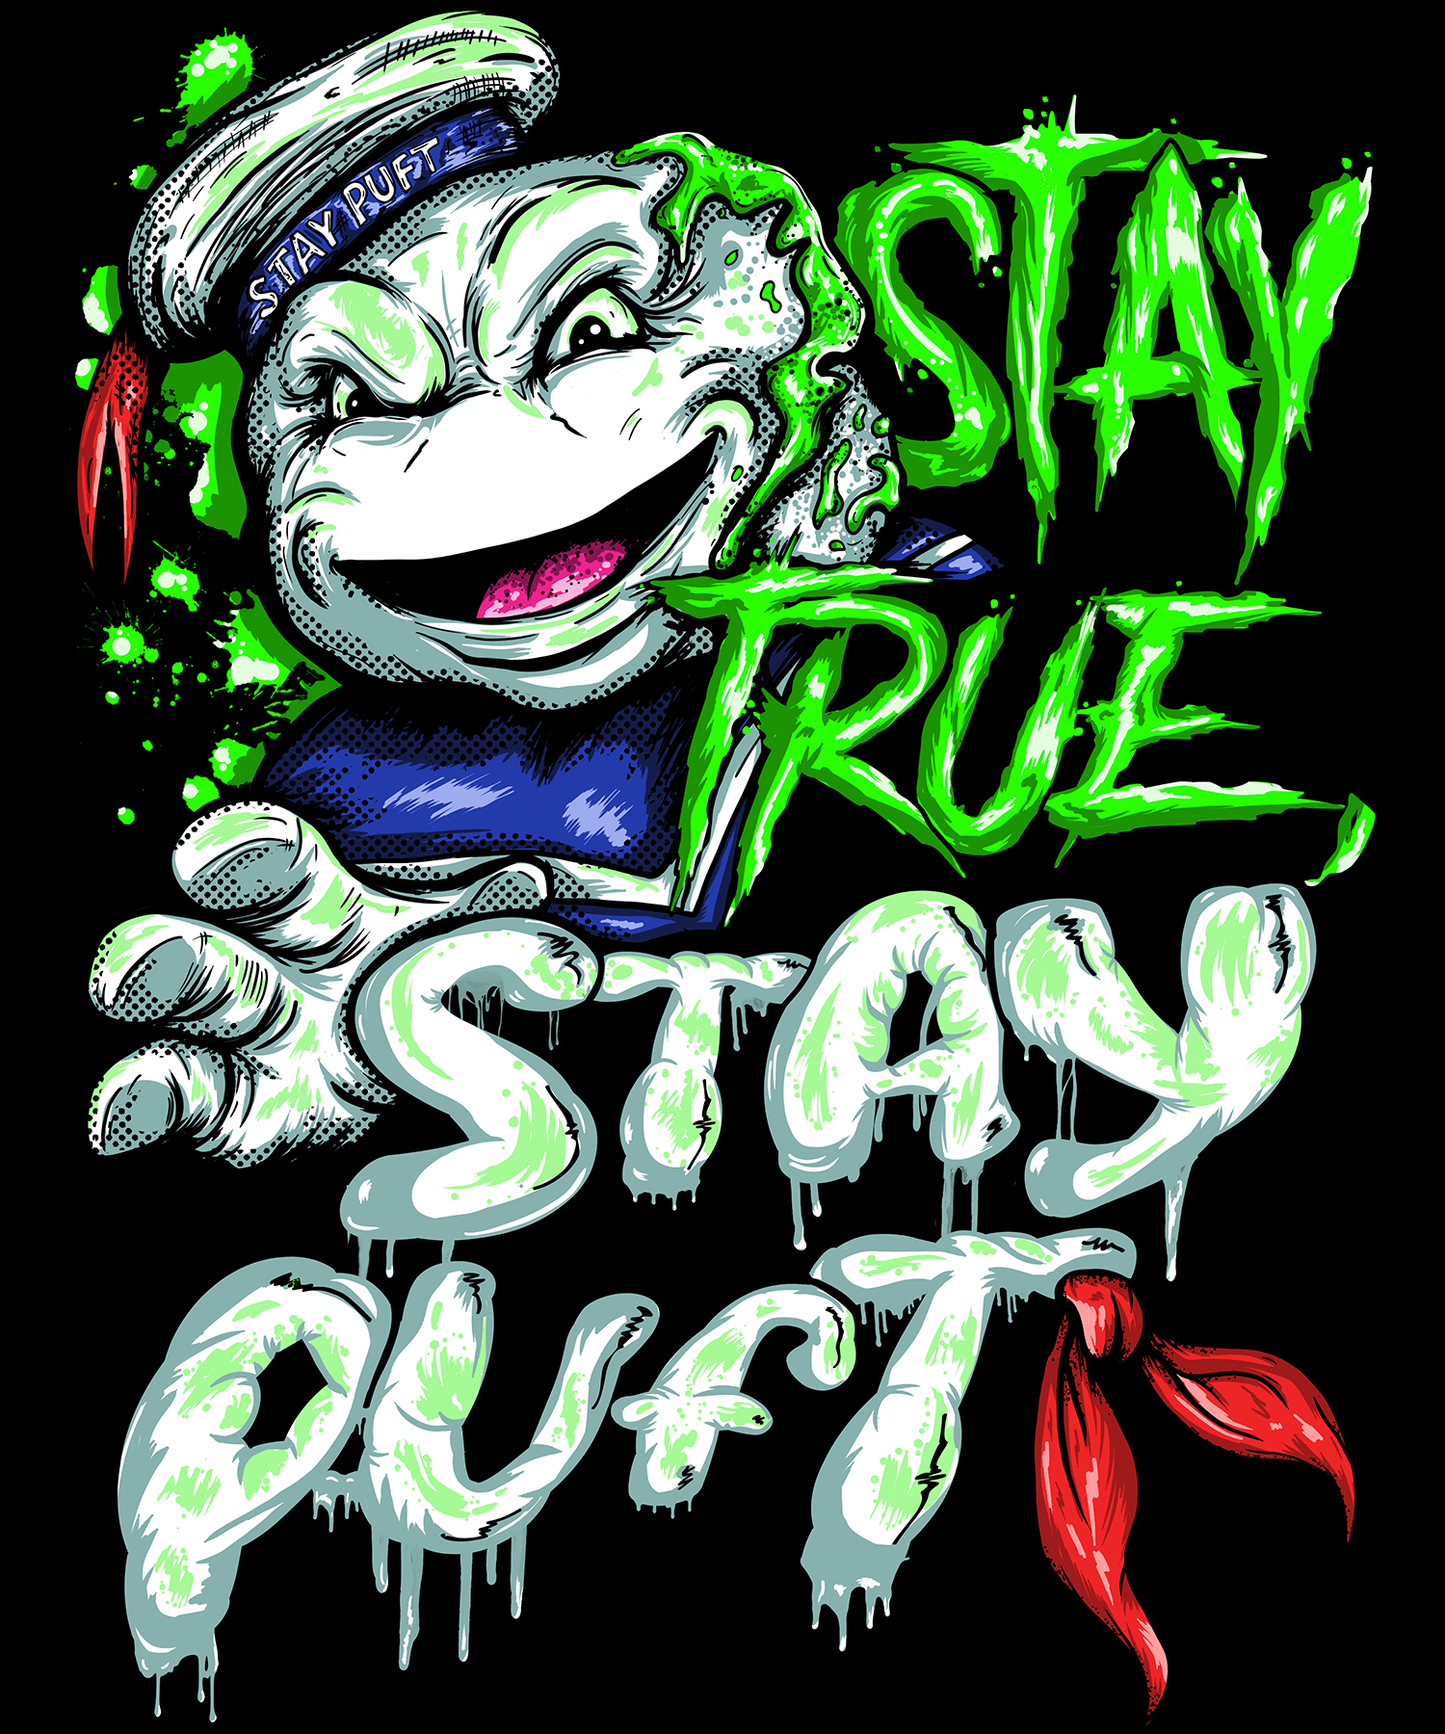 Stay True, Stay Puft T-Shirt